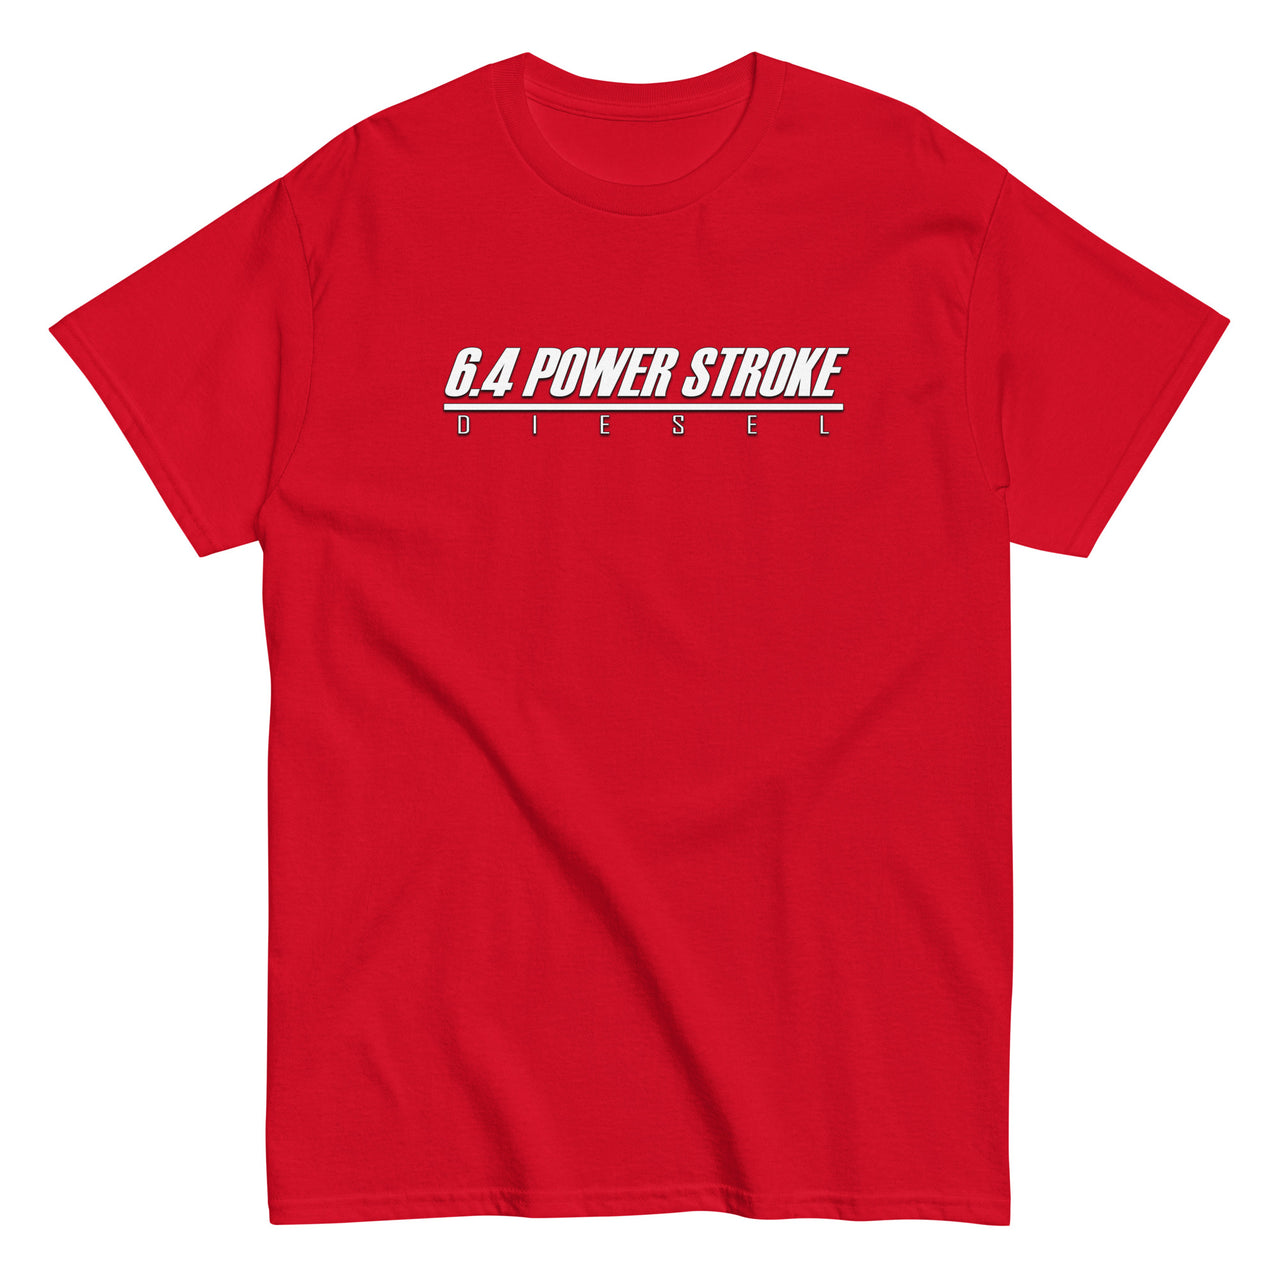 6.4 Power Stroke Trucks t-shirt in red